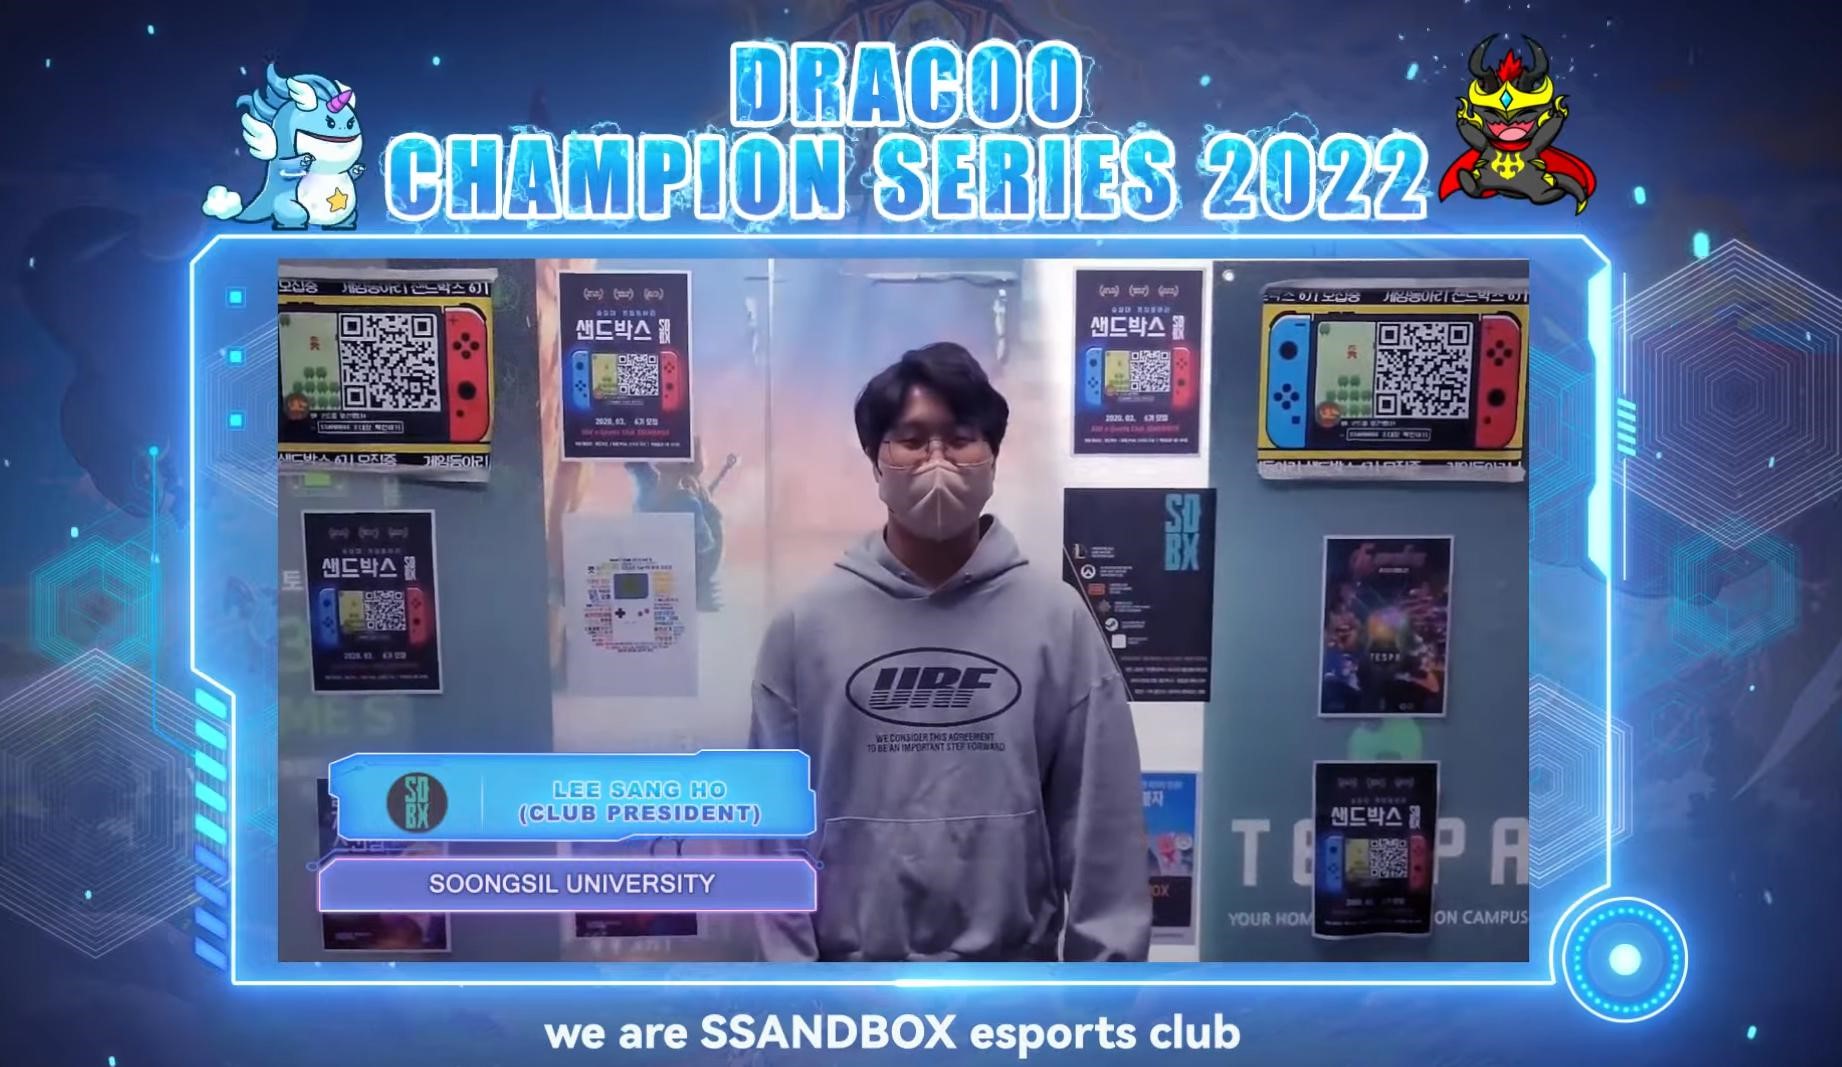 Dracoo Champion